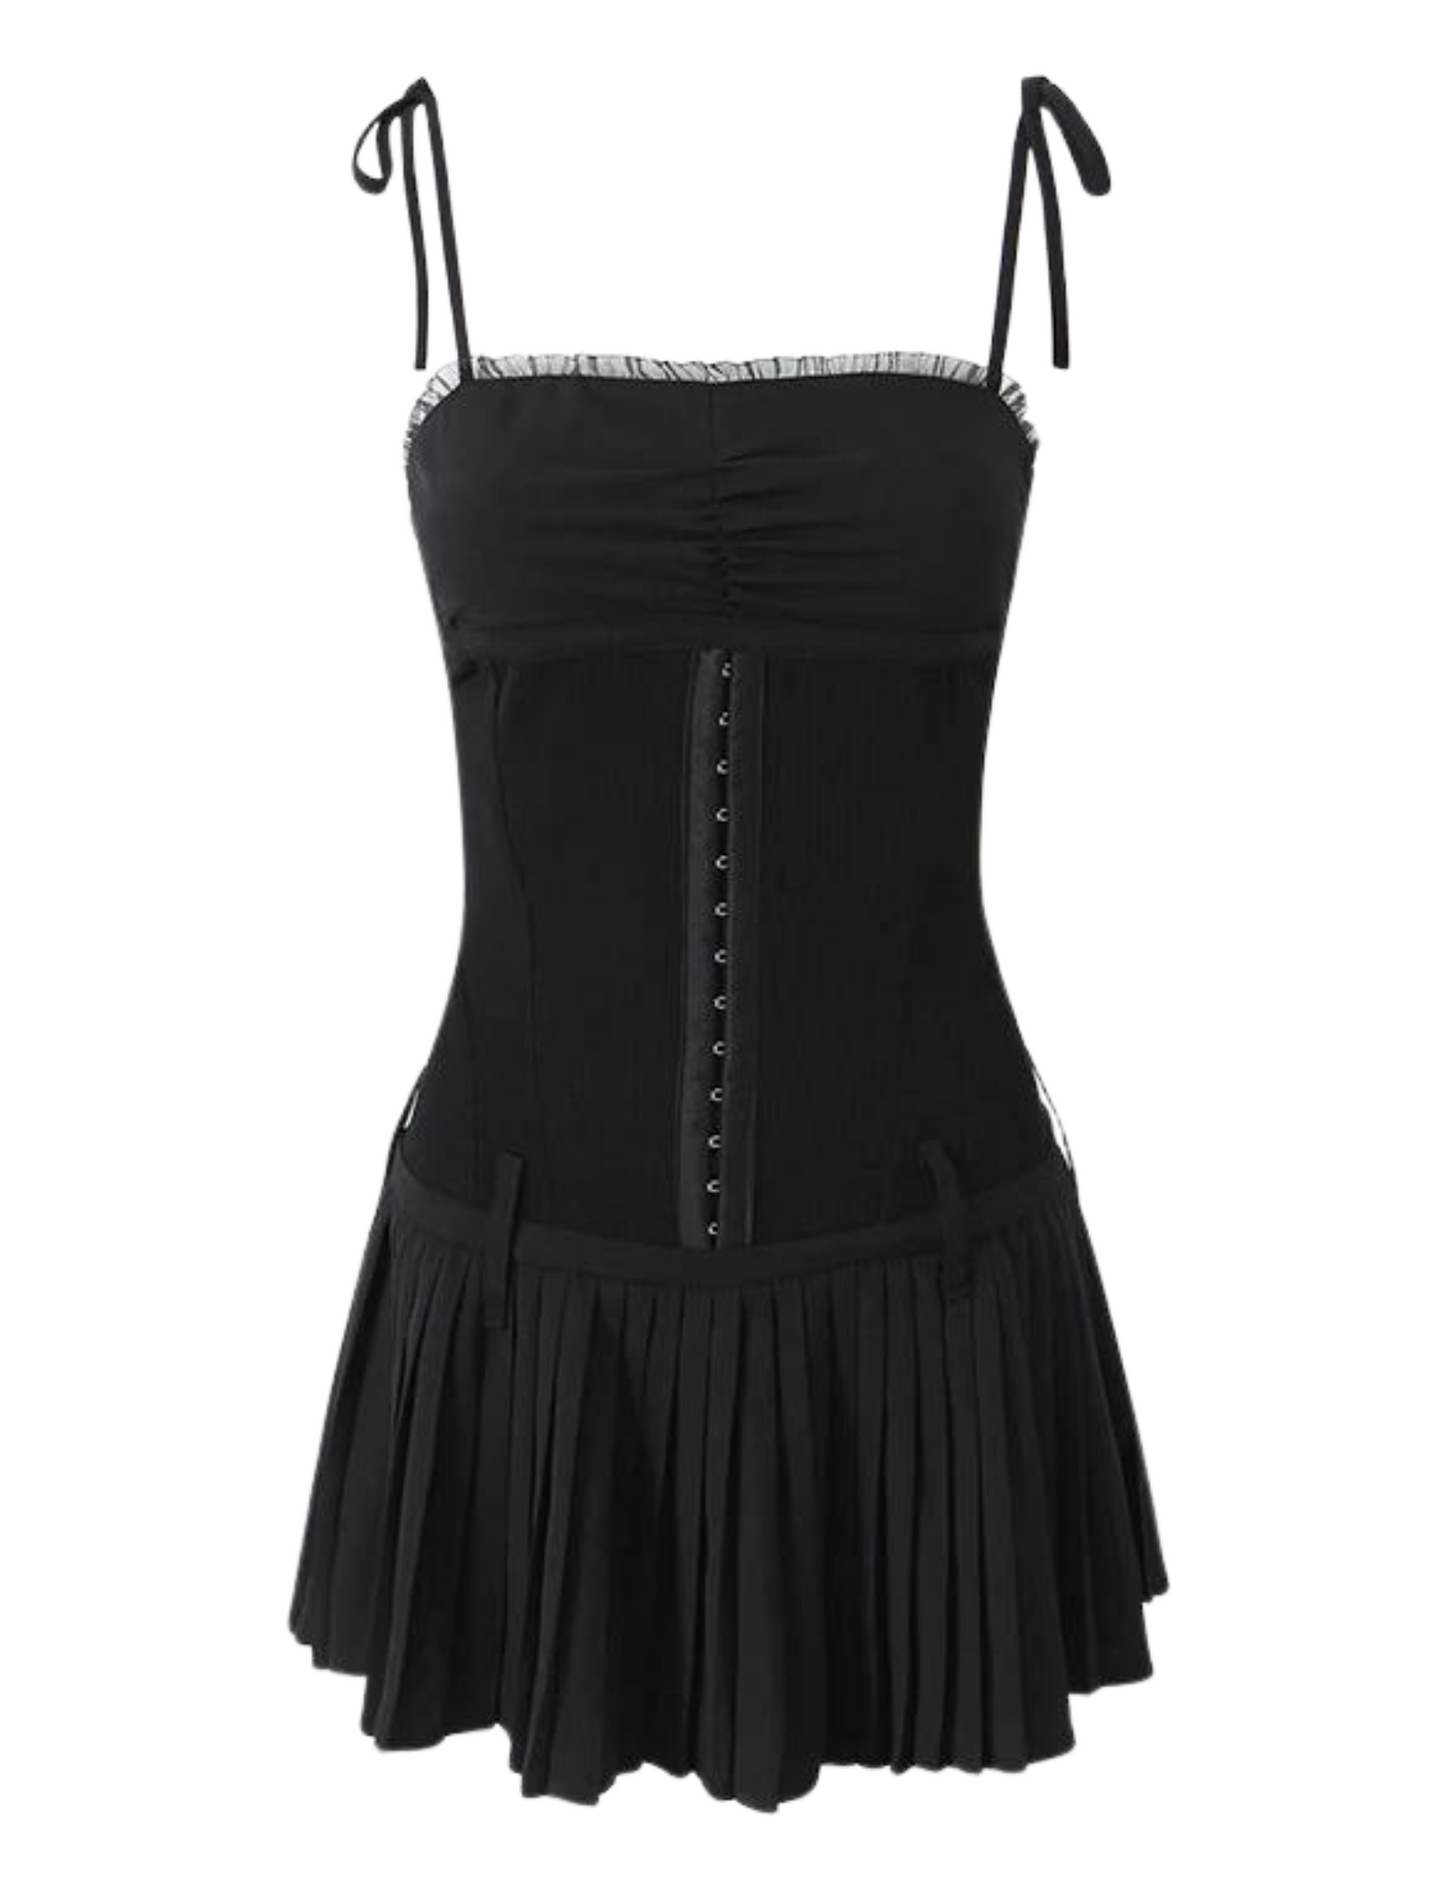 Starlit Affair // Black Dress